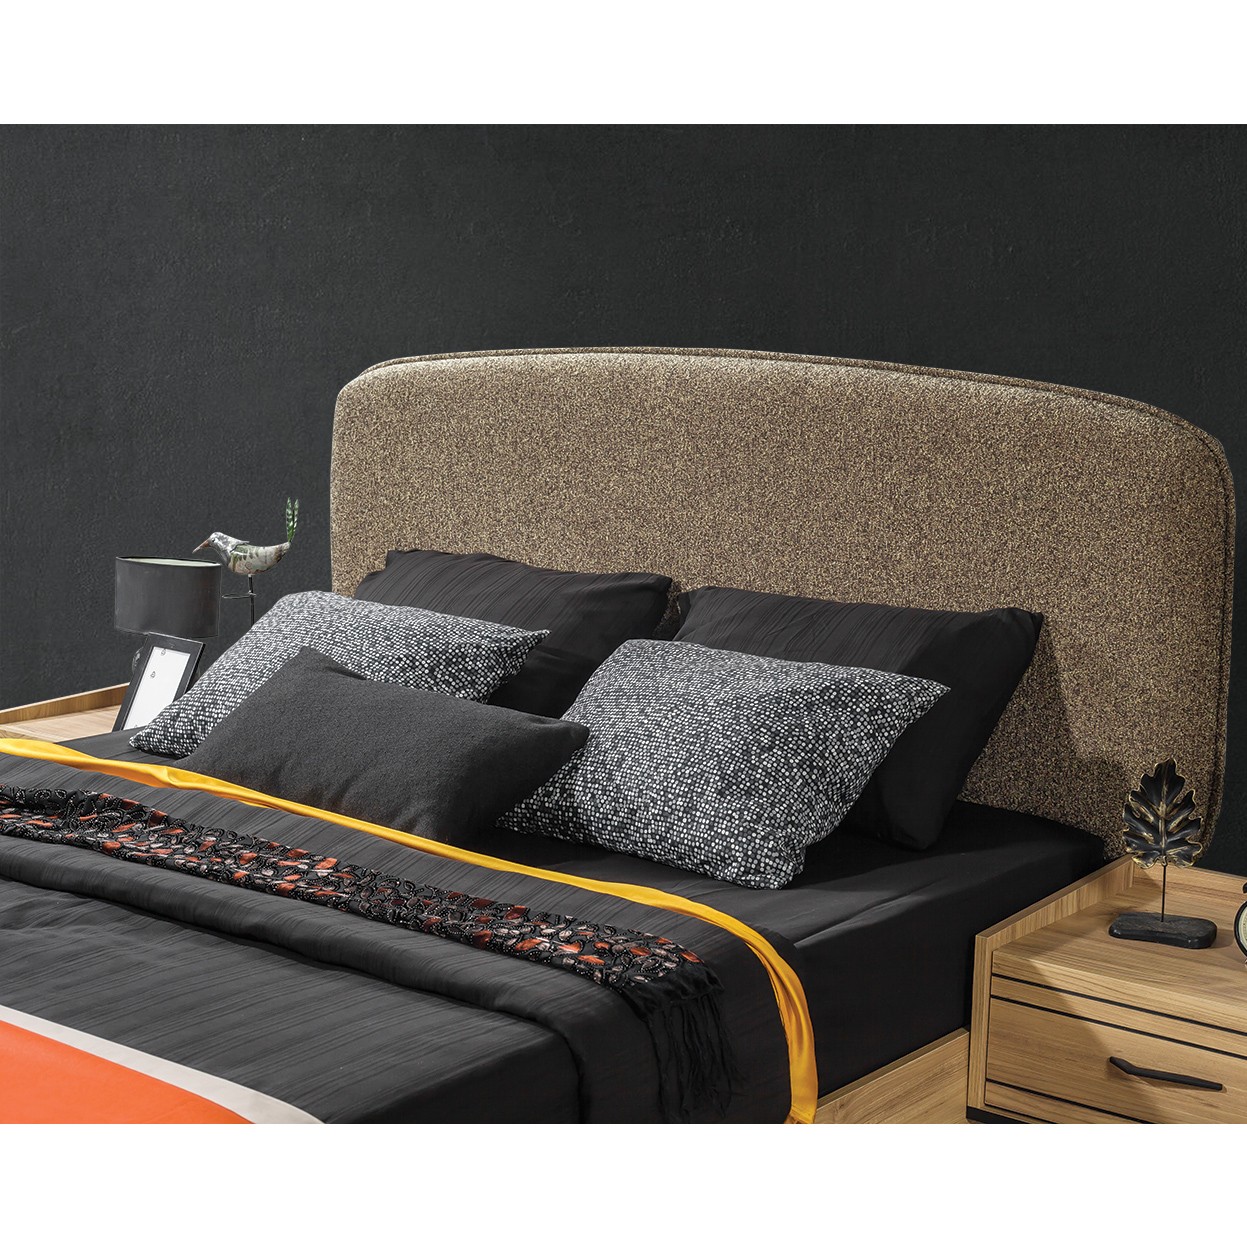 Izgi Bed With Storage 160x200 cm